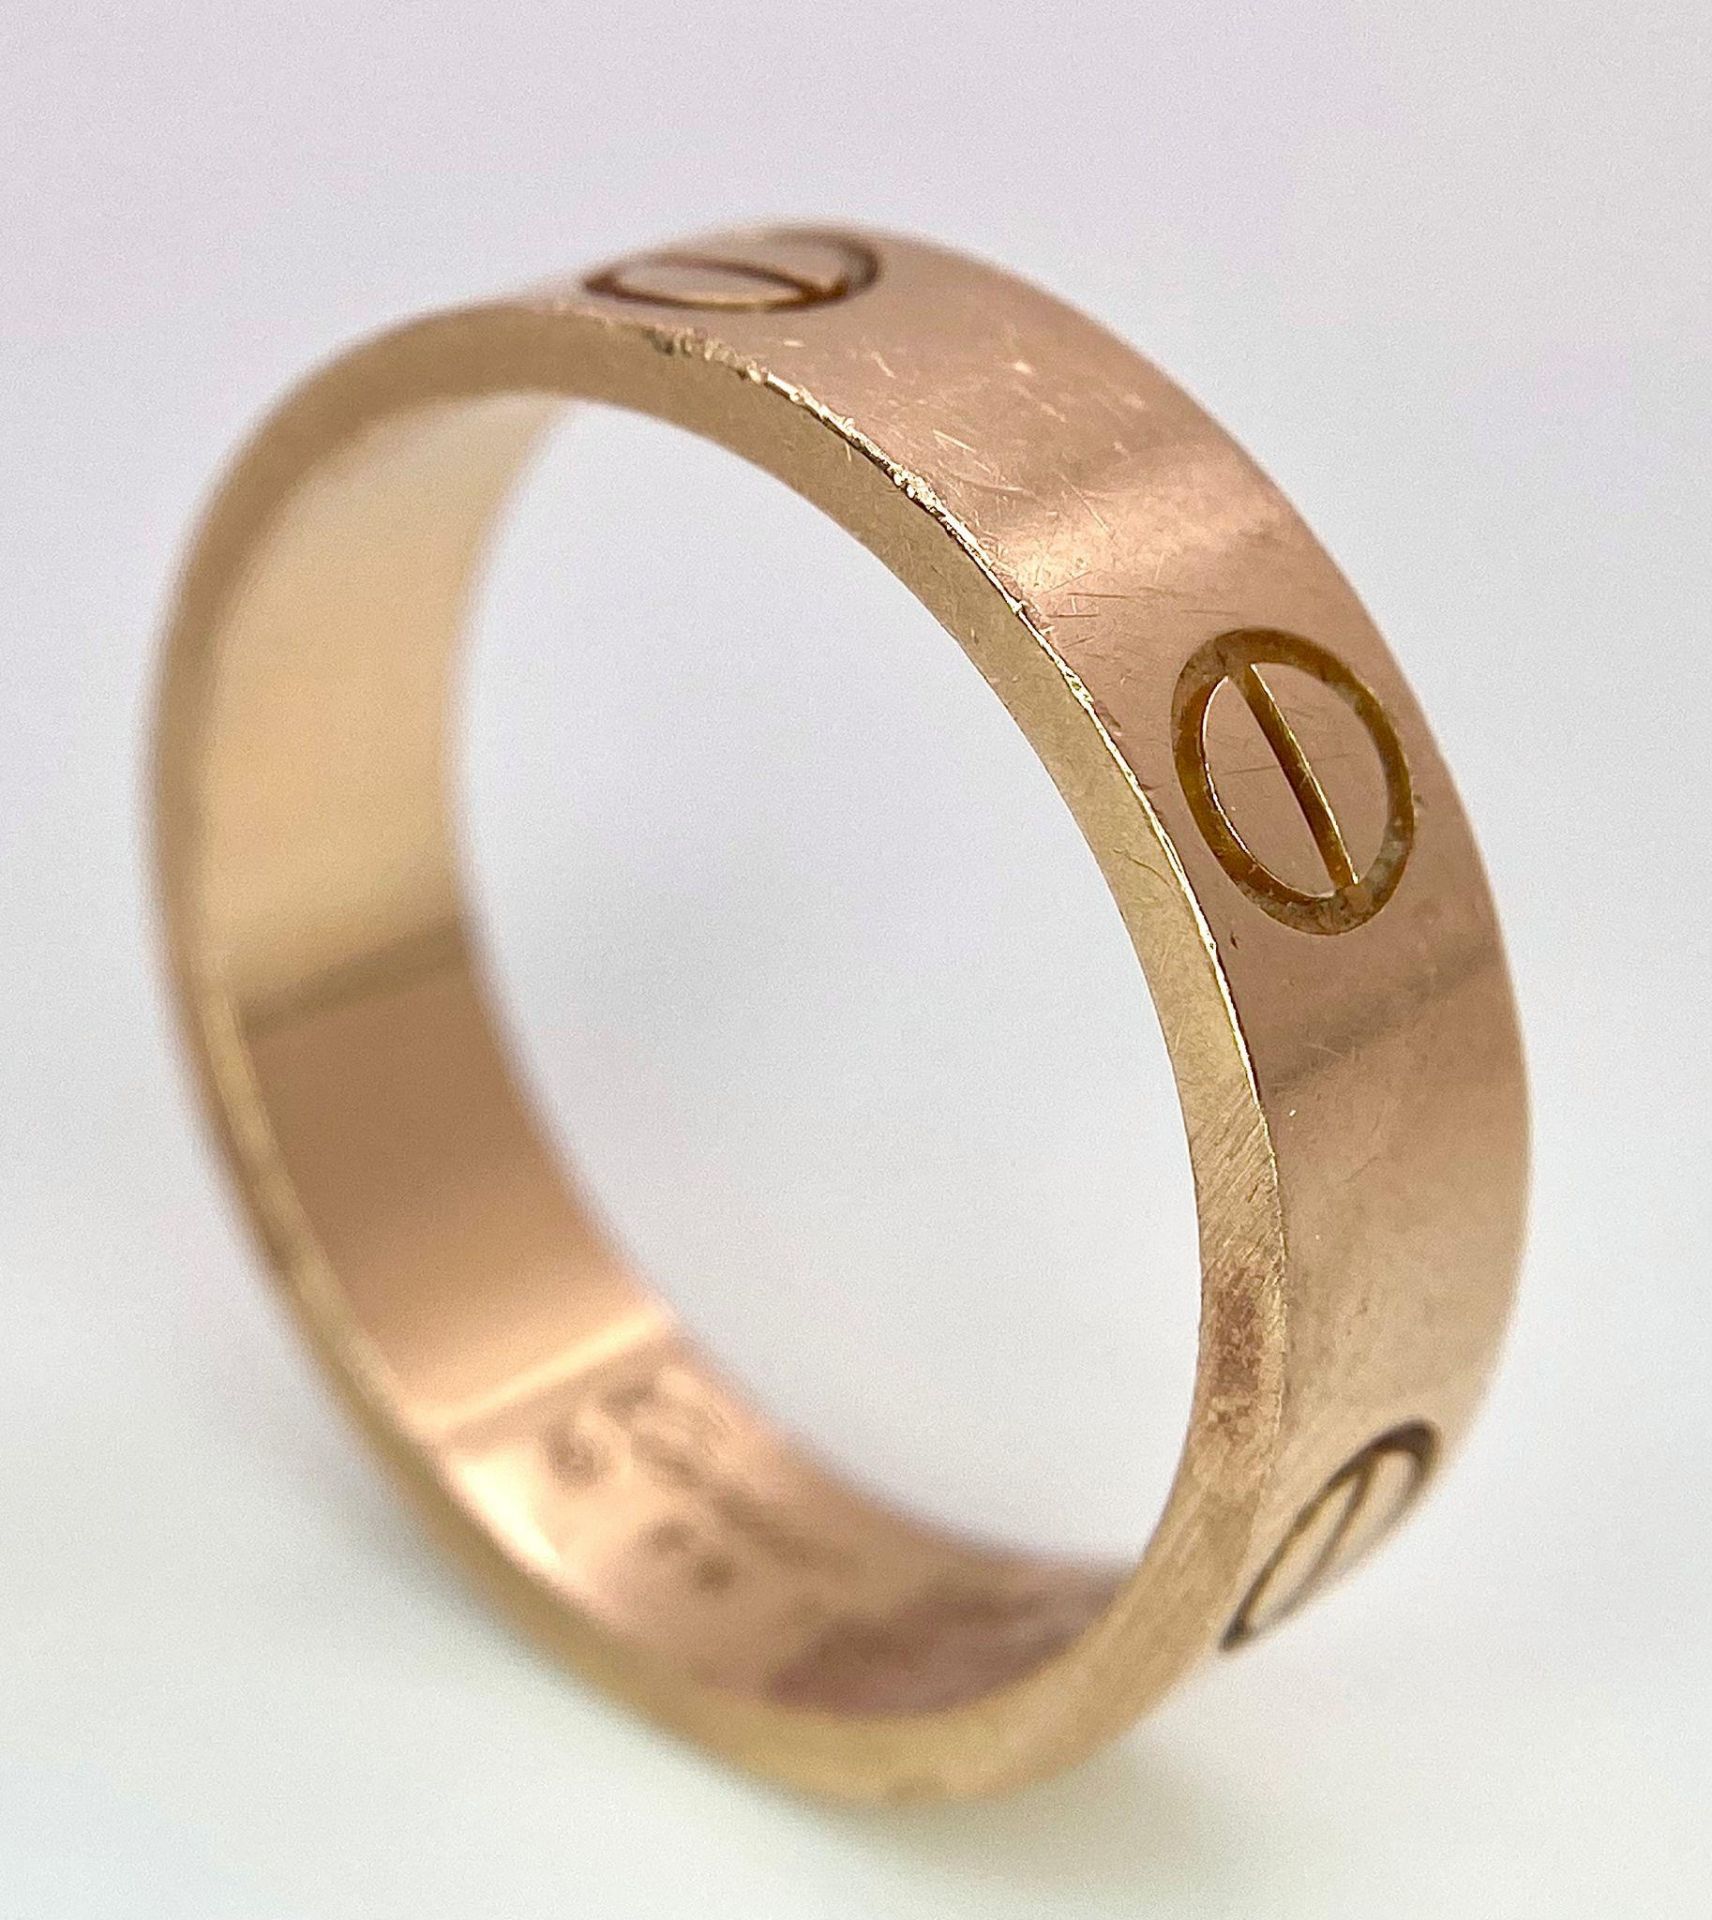 A Cartier 18K Rose Gold Love Band Gents Ring. 6mm width. Cartier hallmarks. Size W. 8.6g weight.